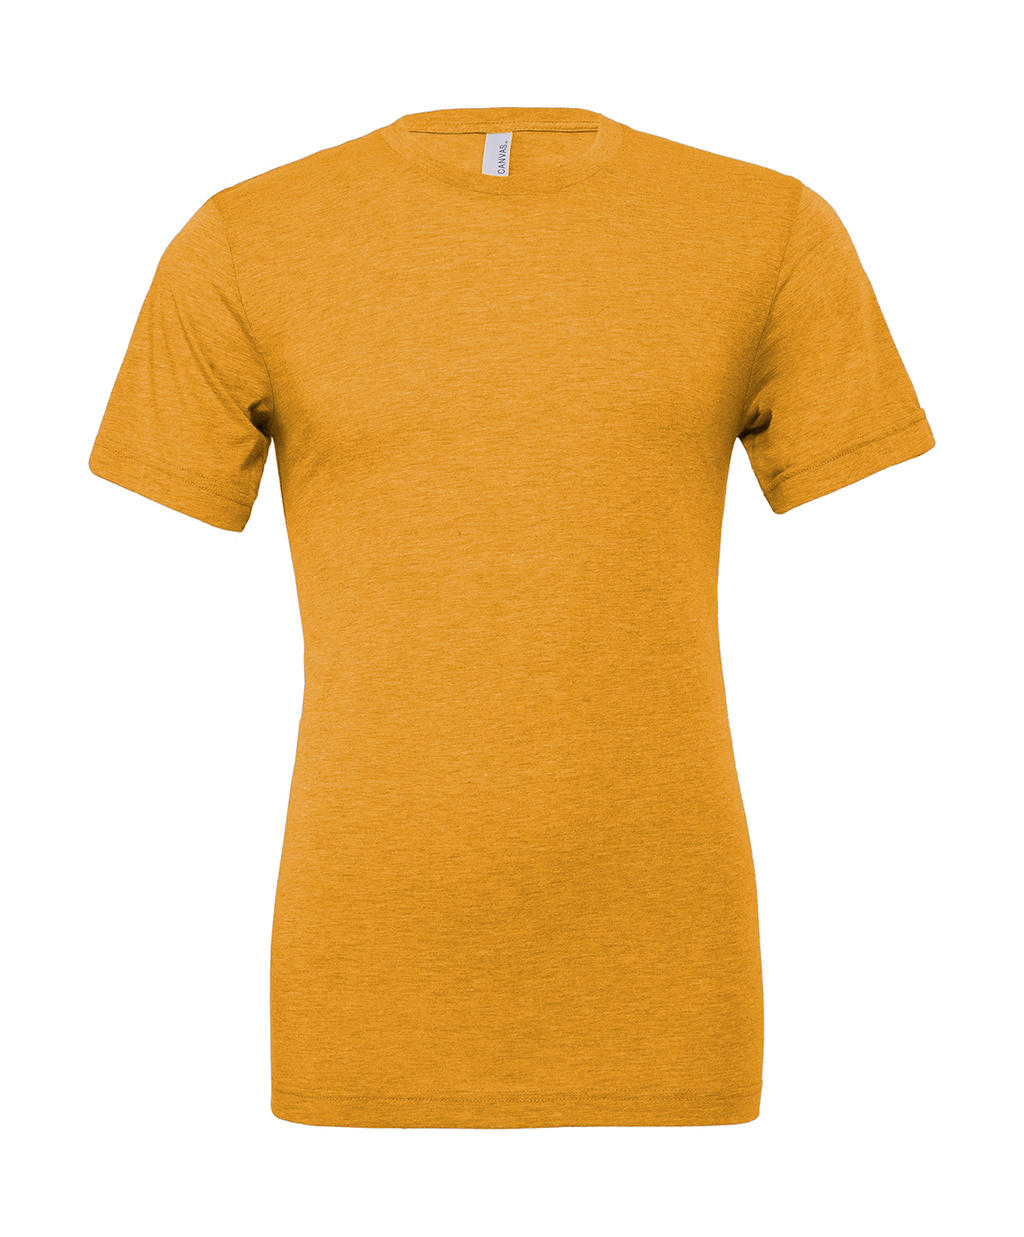 Tričko Bella Triblend Crew Men - oranžové-šedé, XL